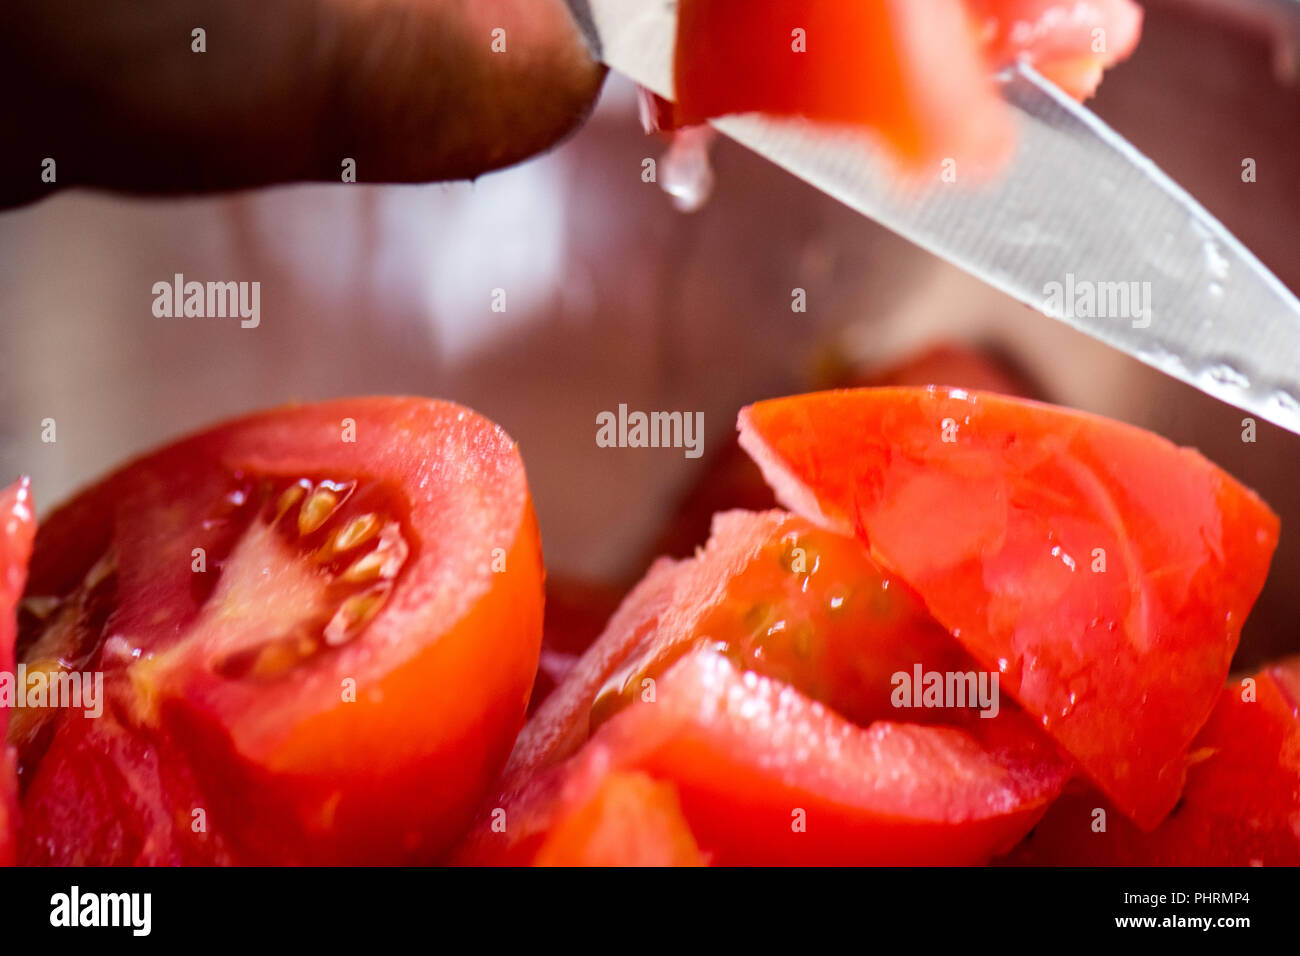 Food preparation in kitchen Stock Photo